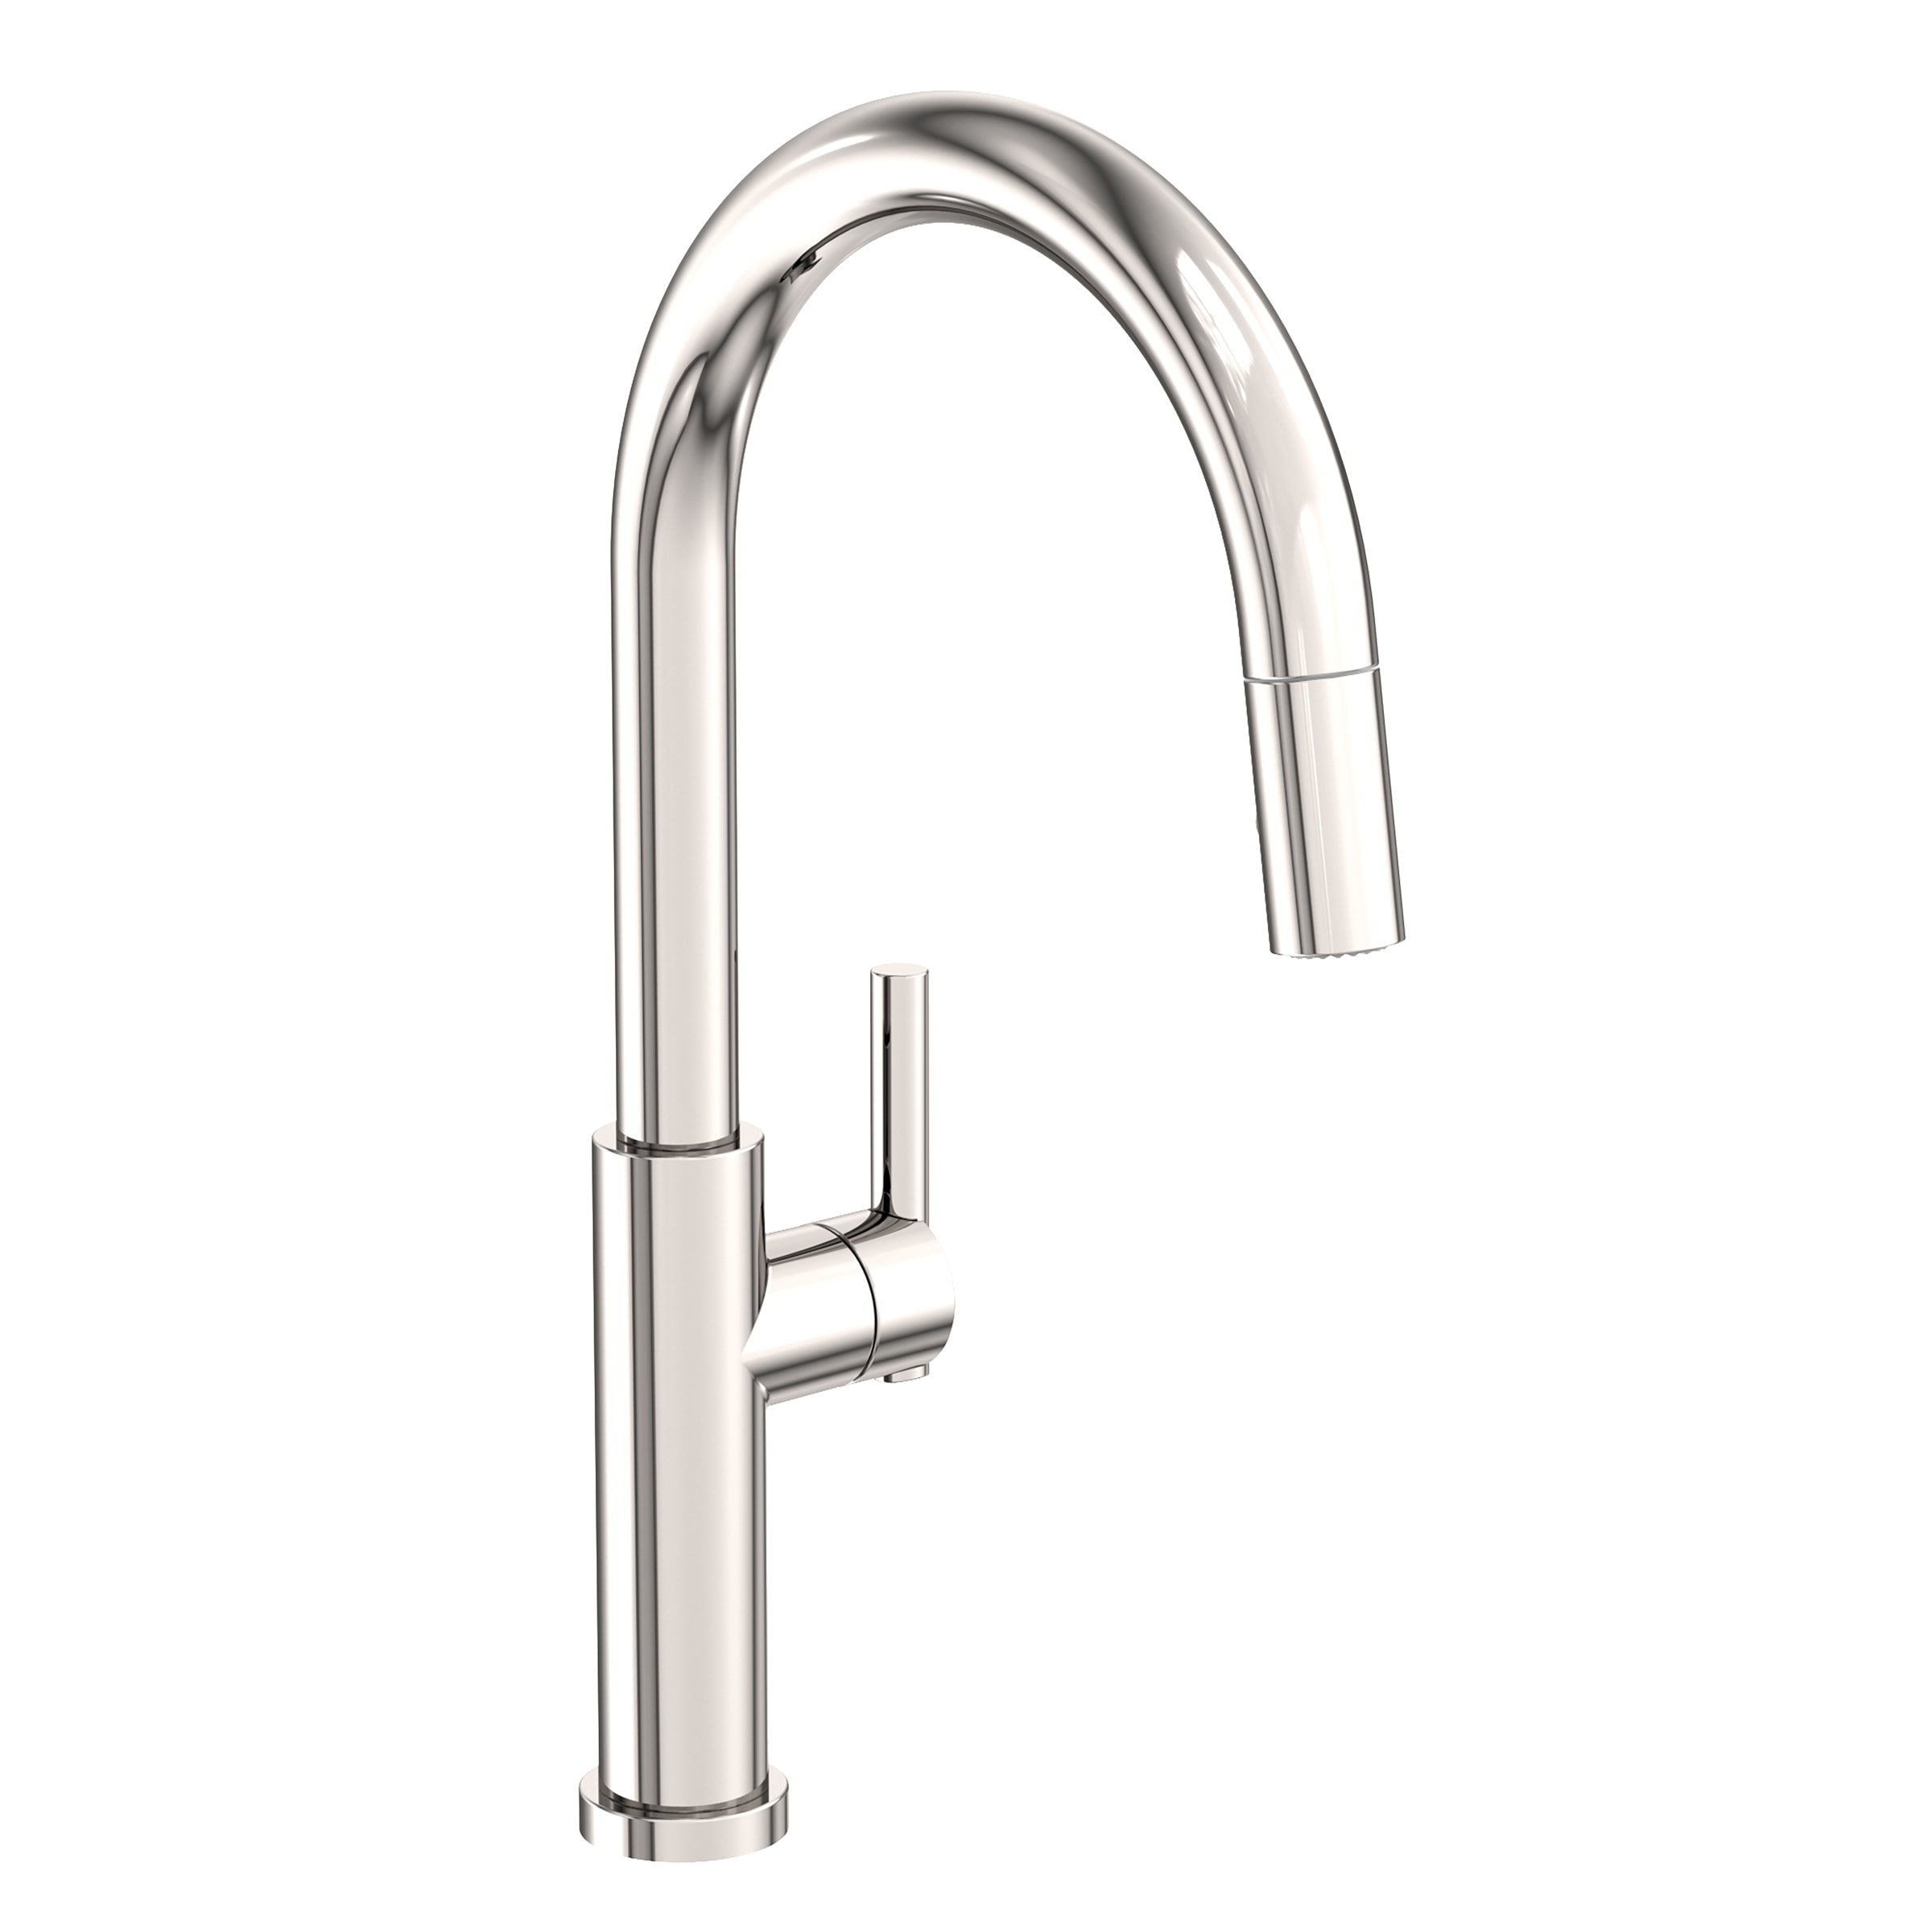 Newport Brass East Linear Pull-down Kitchen Faucet